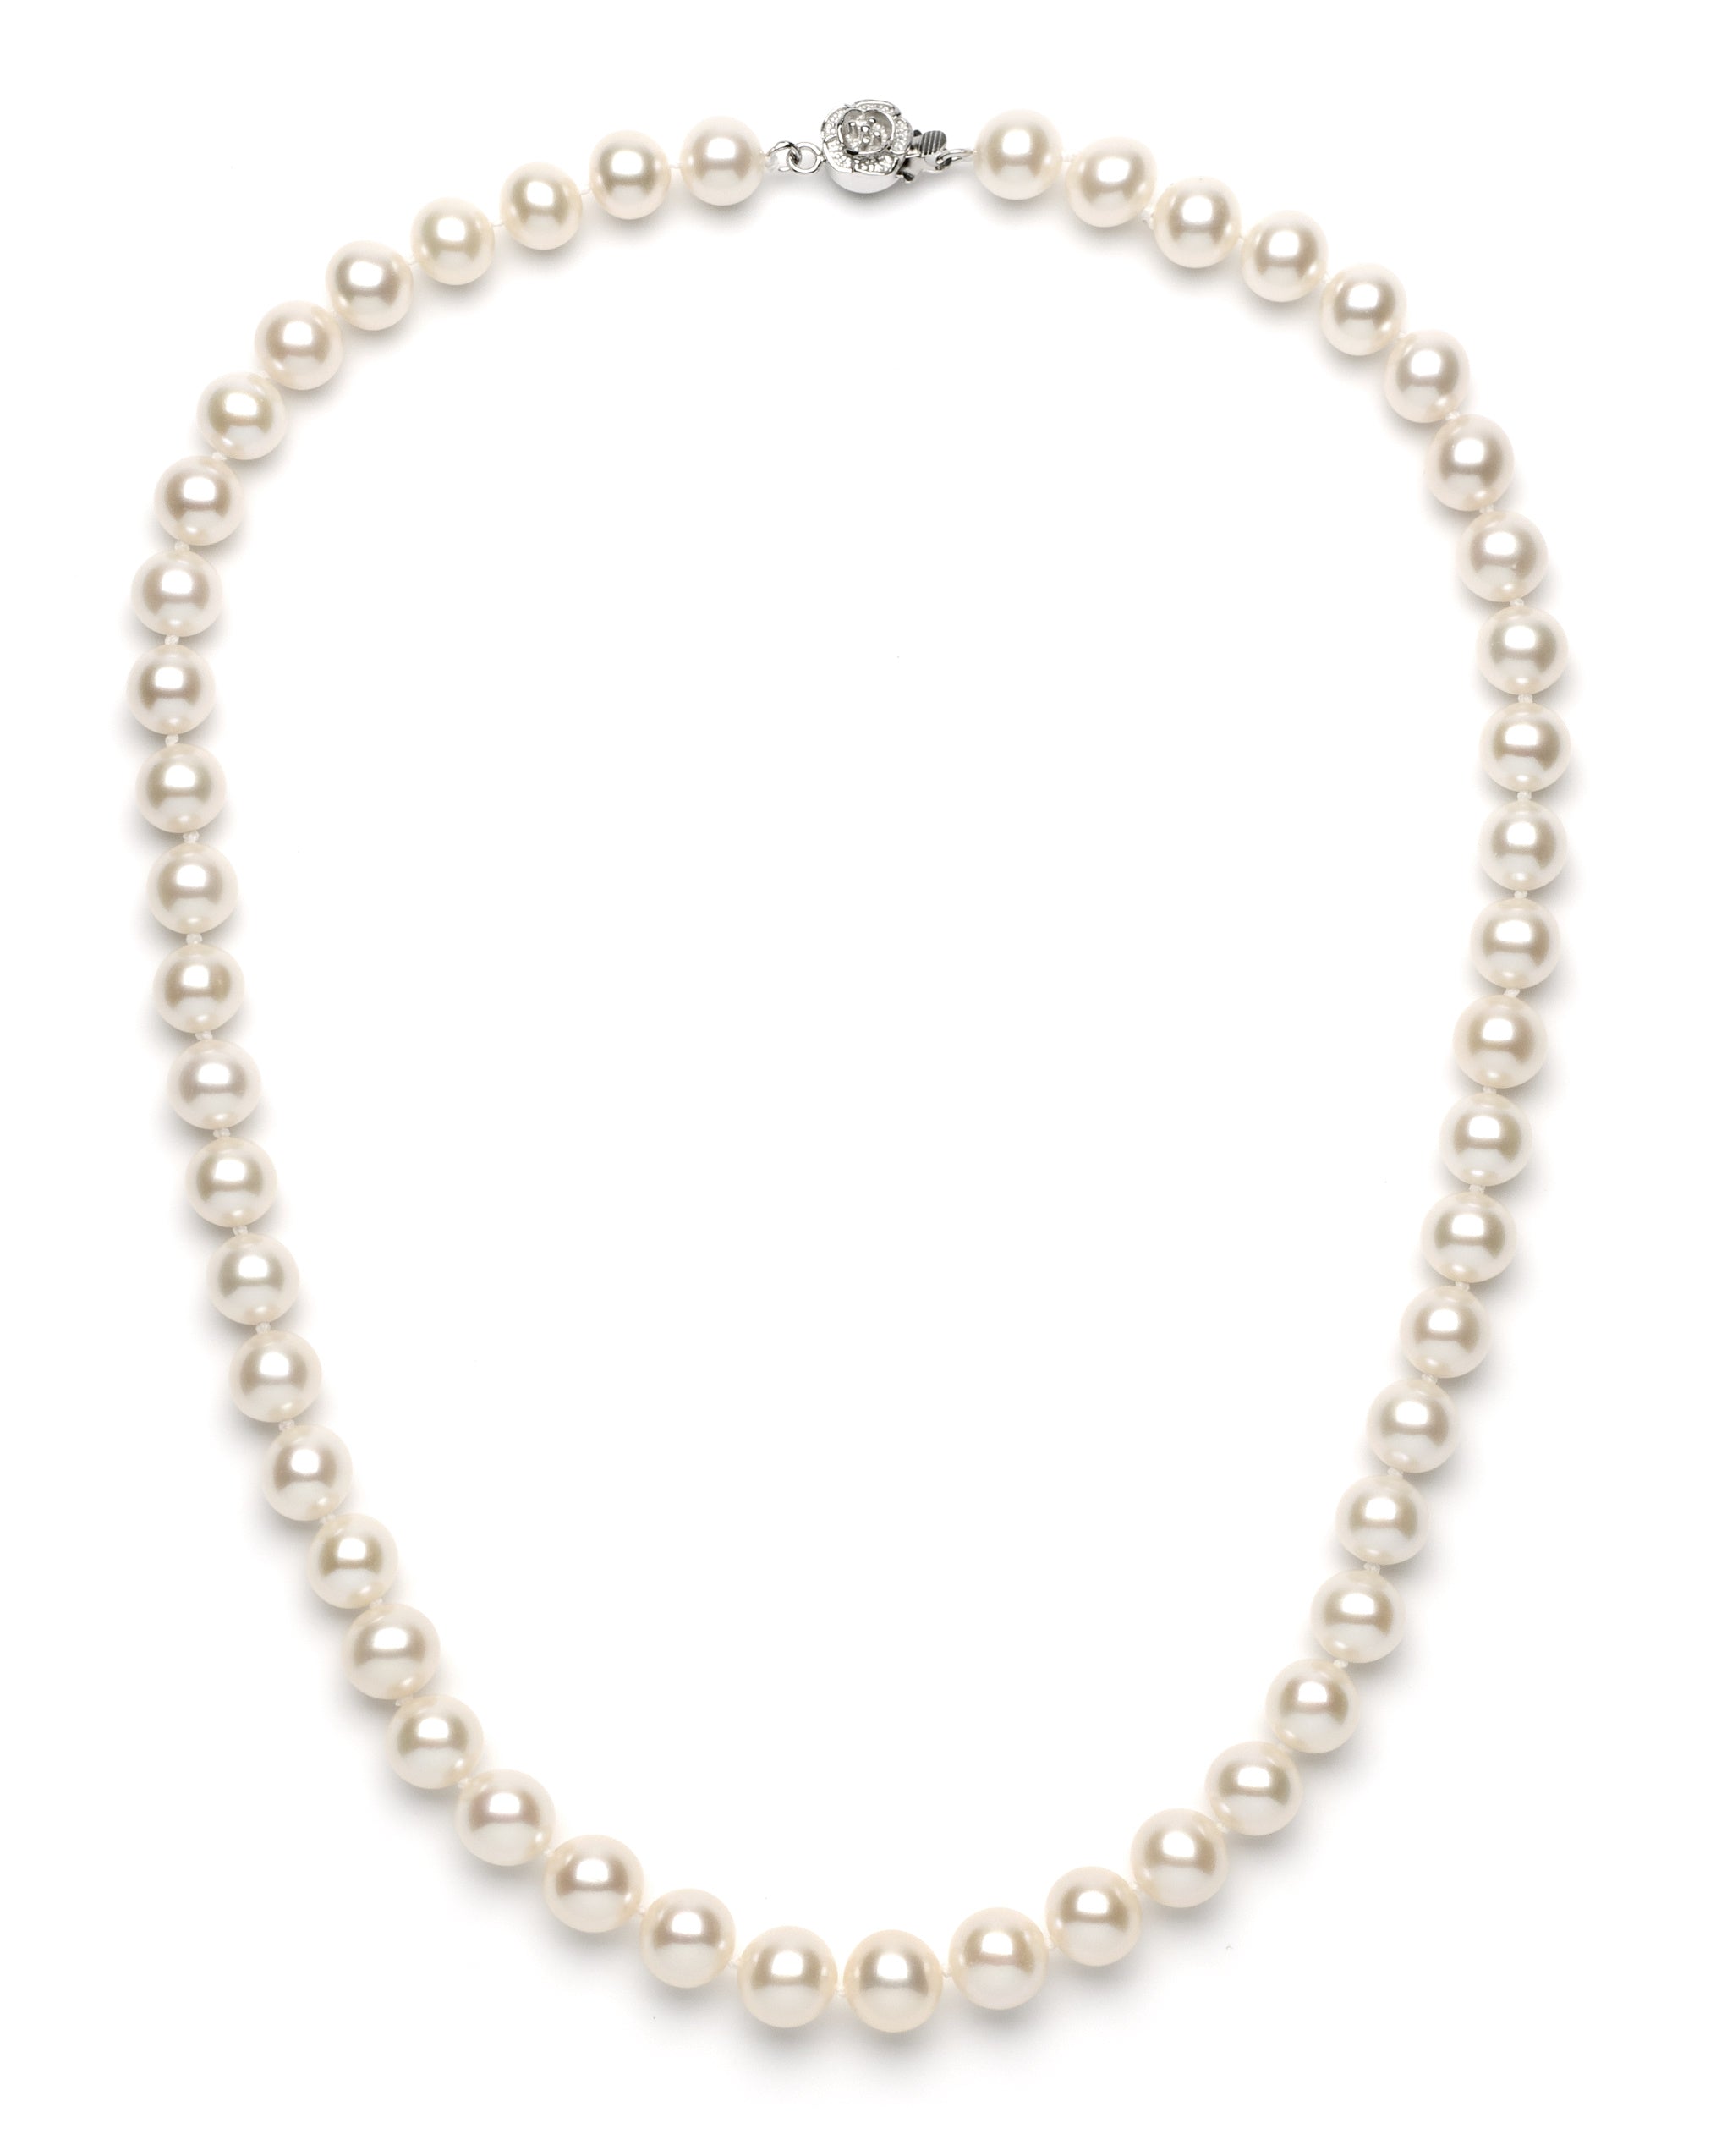 Necklace/Bracelet Set 9 mm White Freshwater Pearls